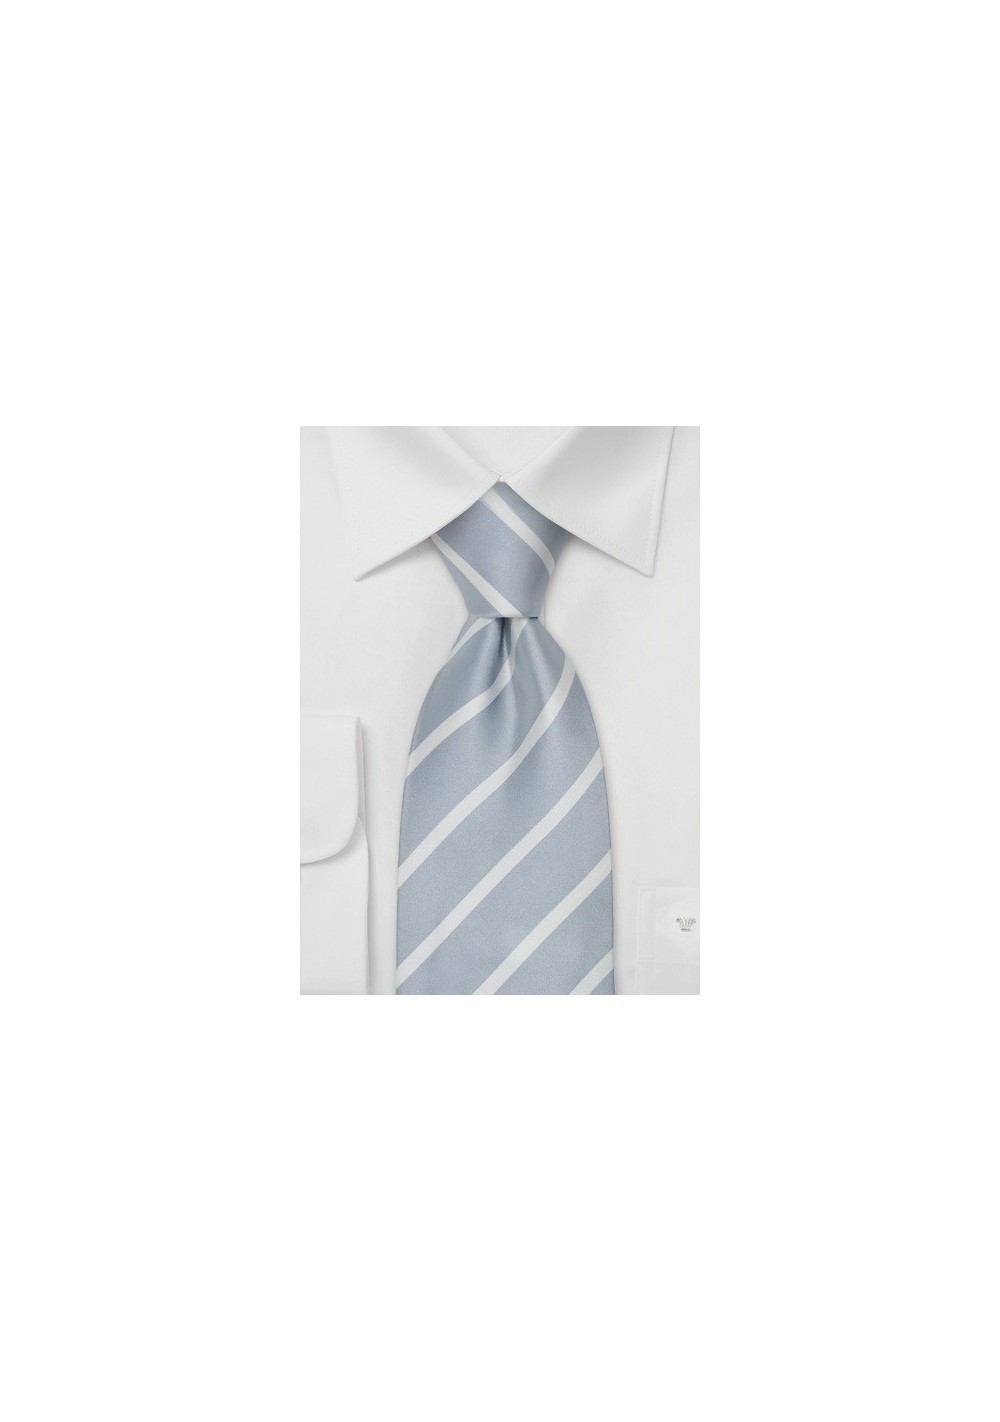 Silver Neckties - Striped Silver Silk Tie